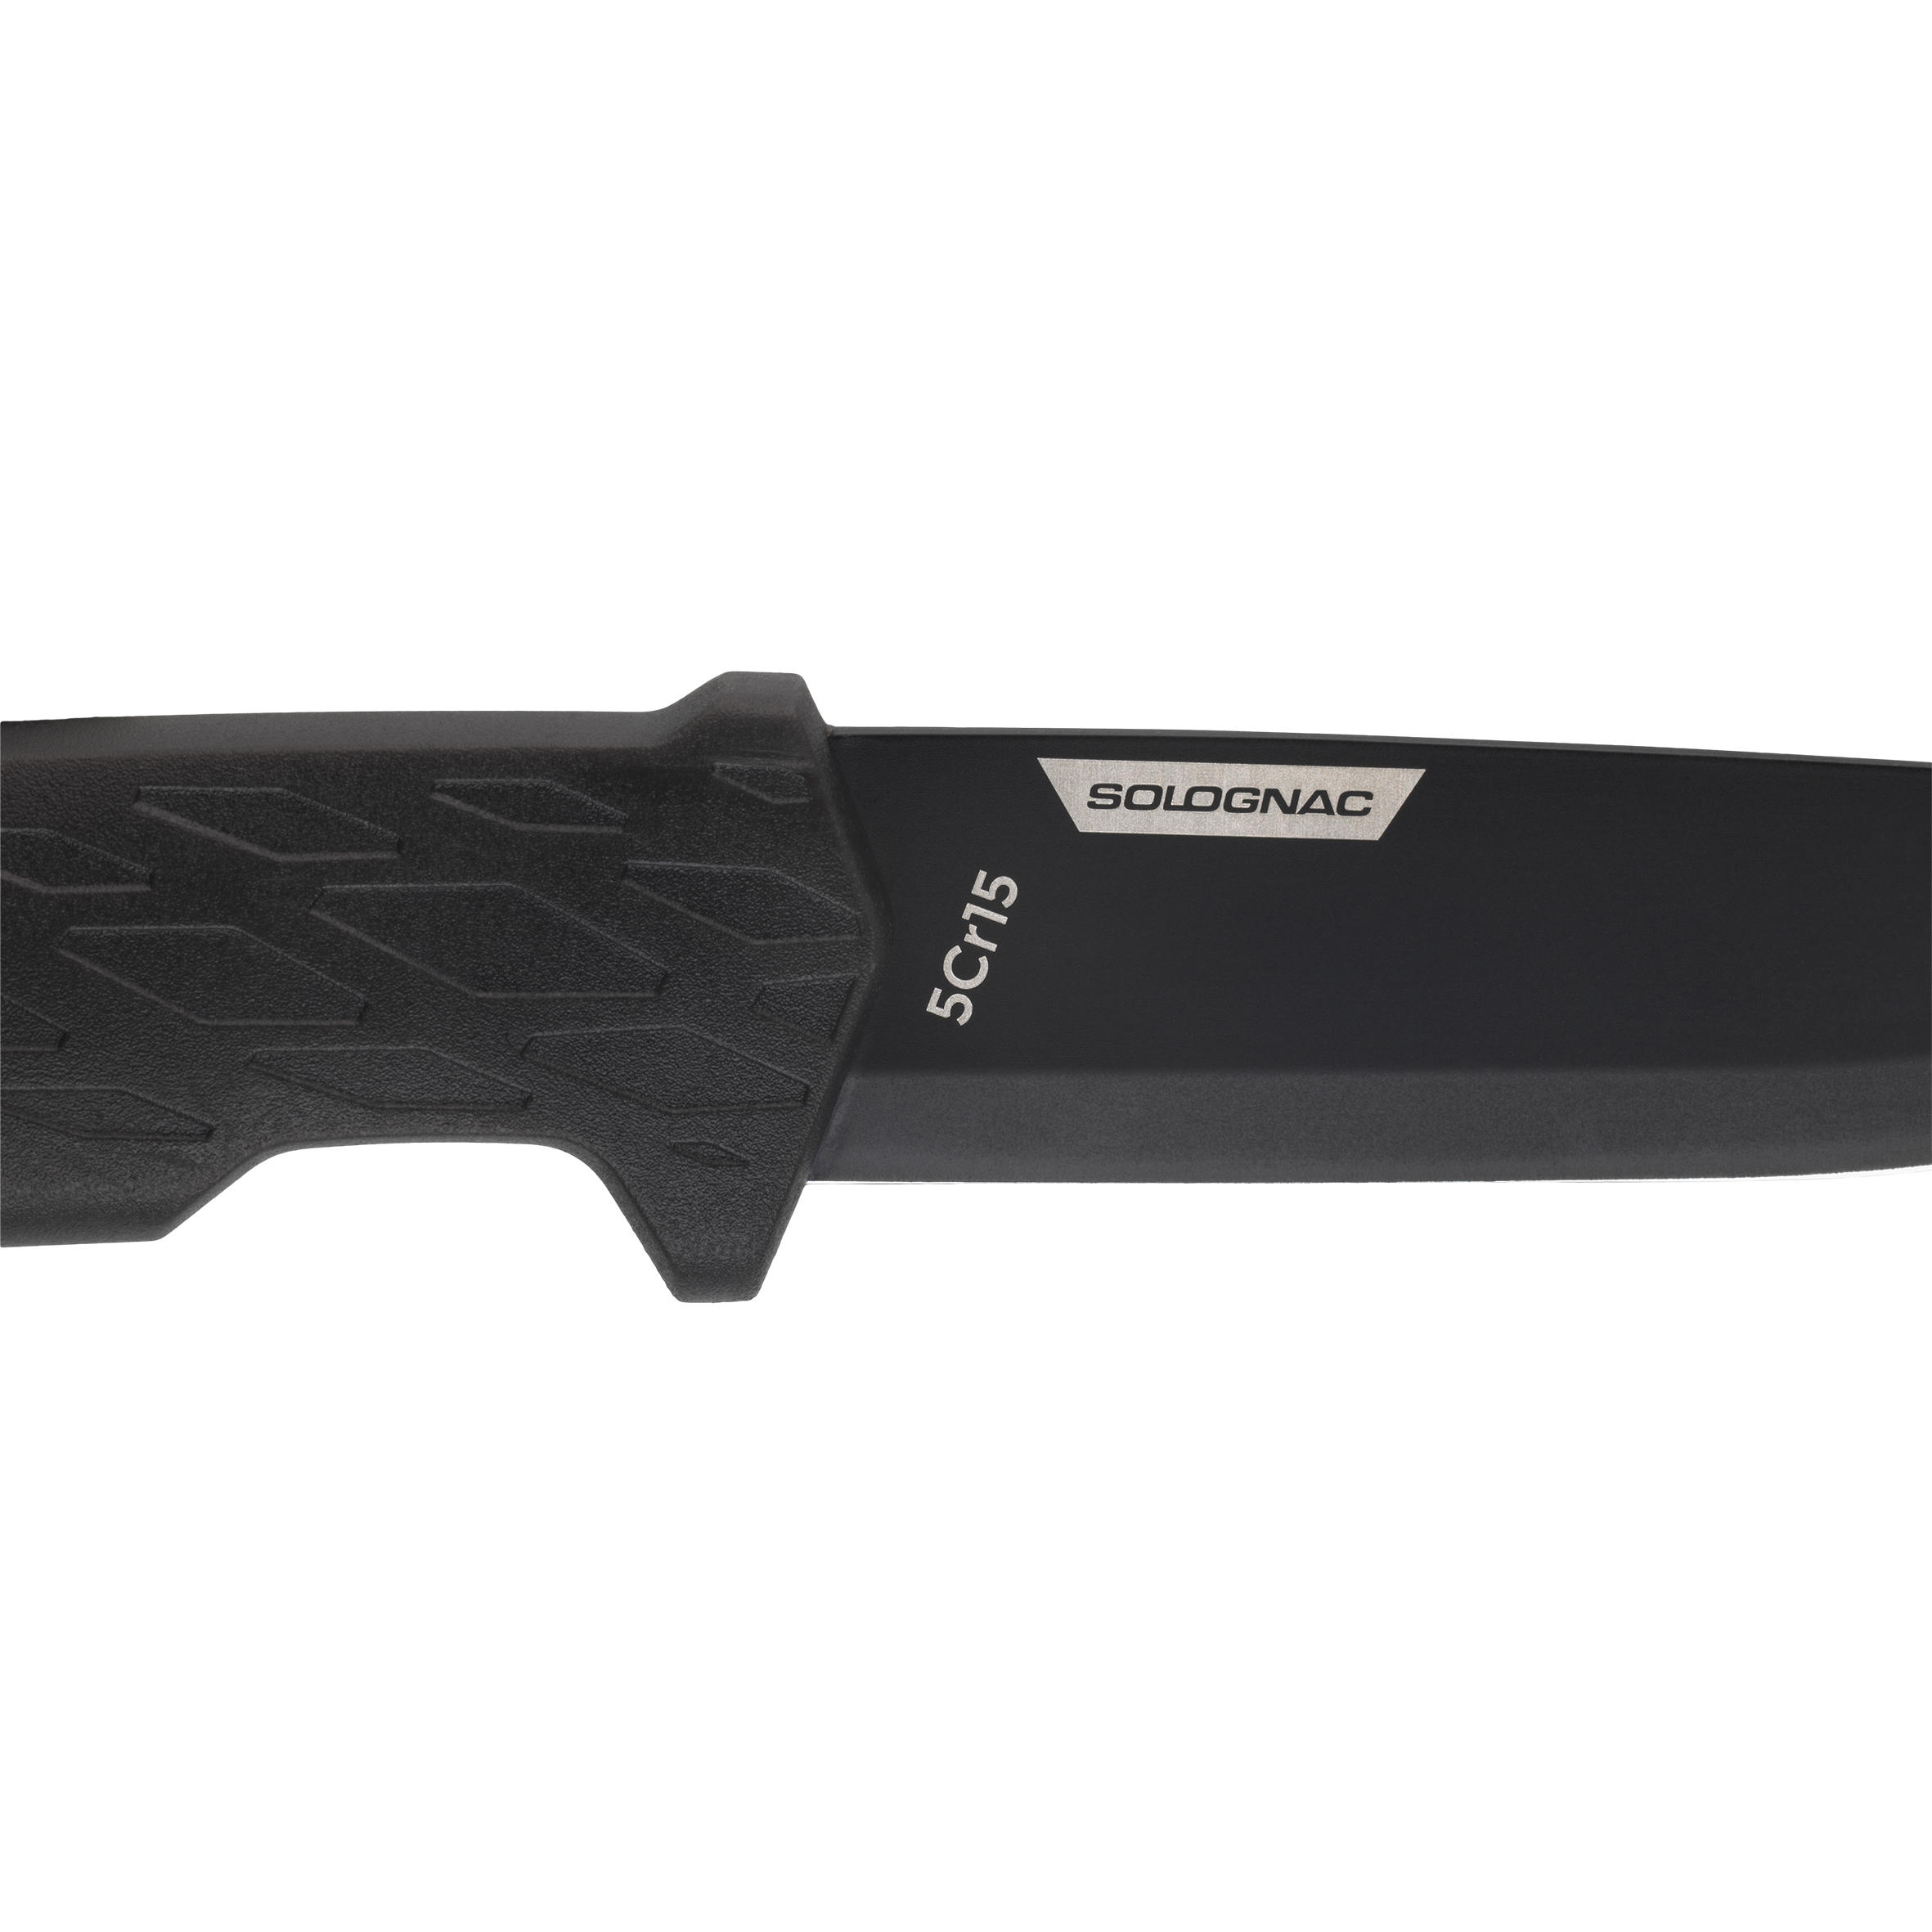 Sika 100 hunting knife - black - Solognac - Decathlon